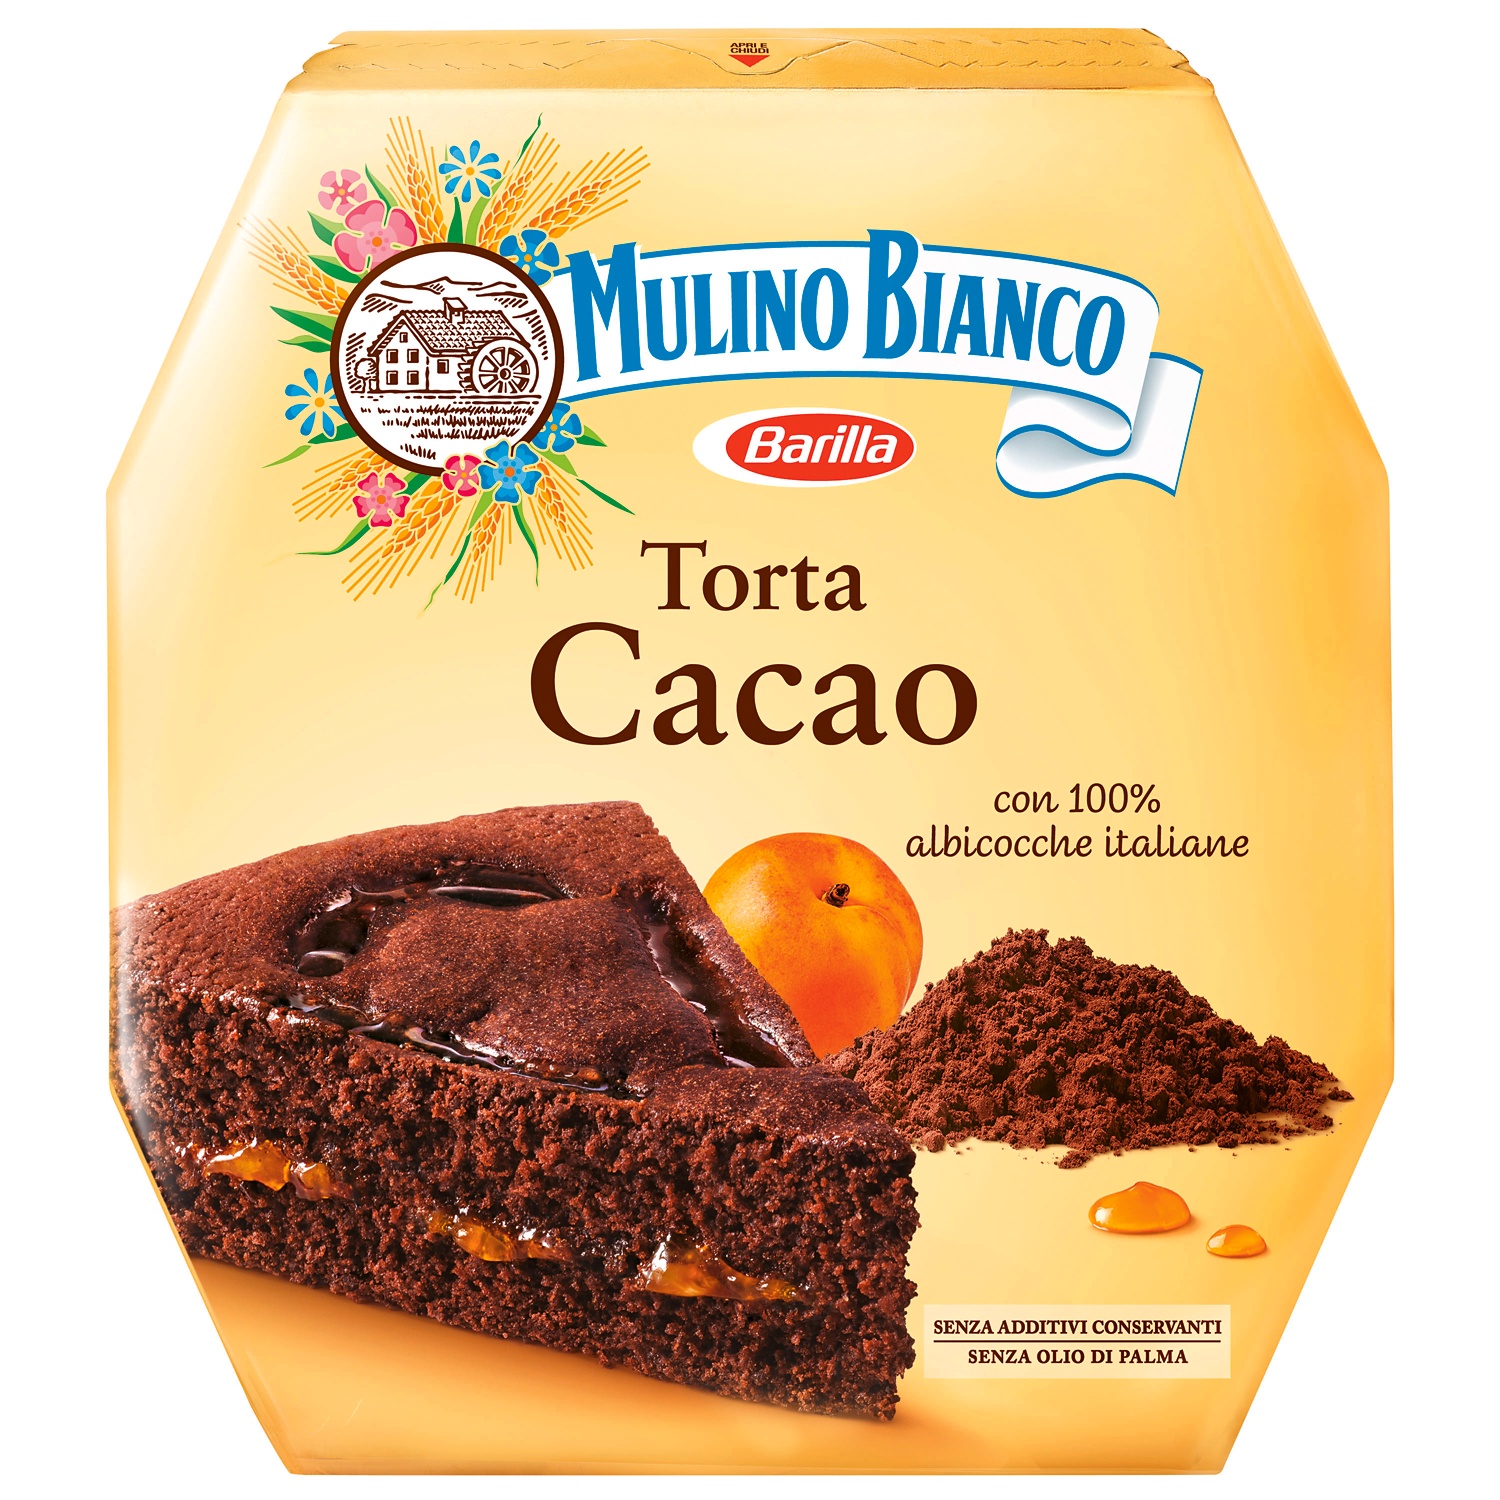 Torta al cacao MULINO BIANCO